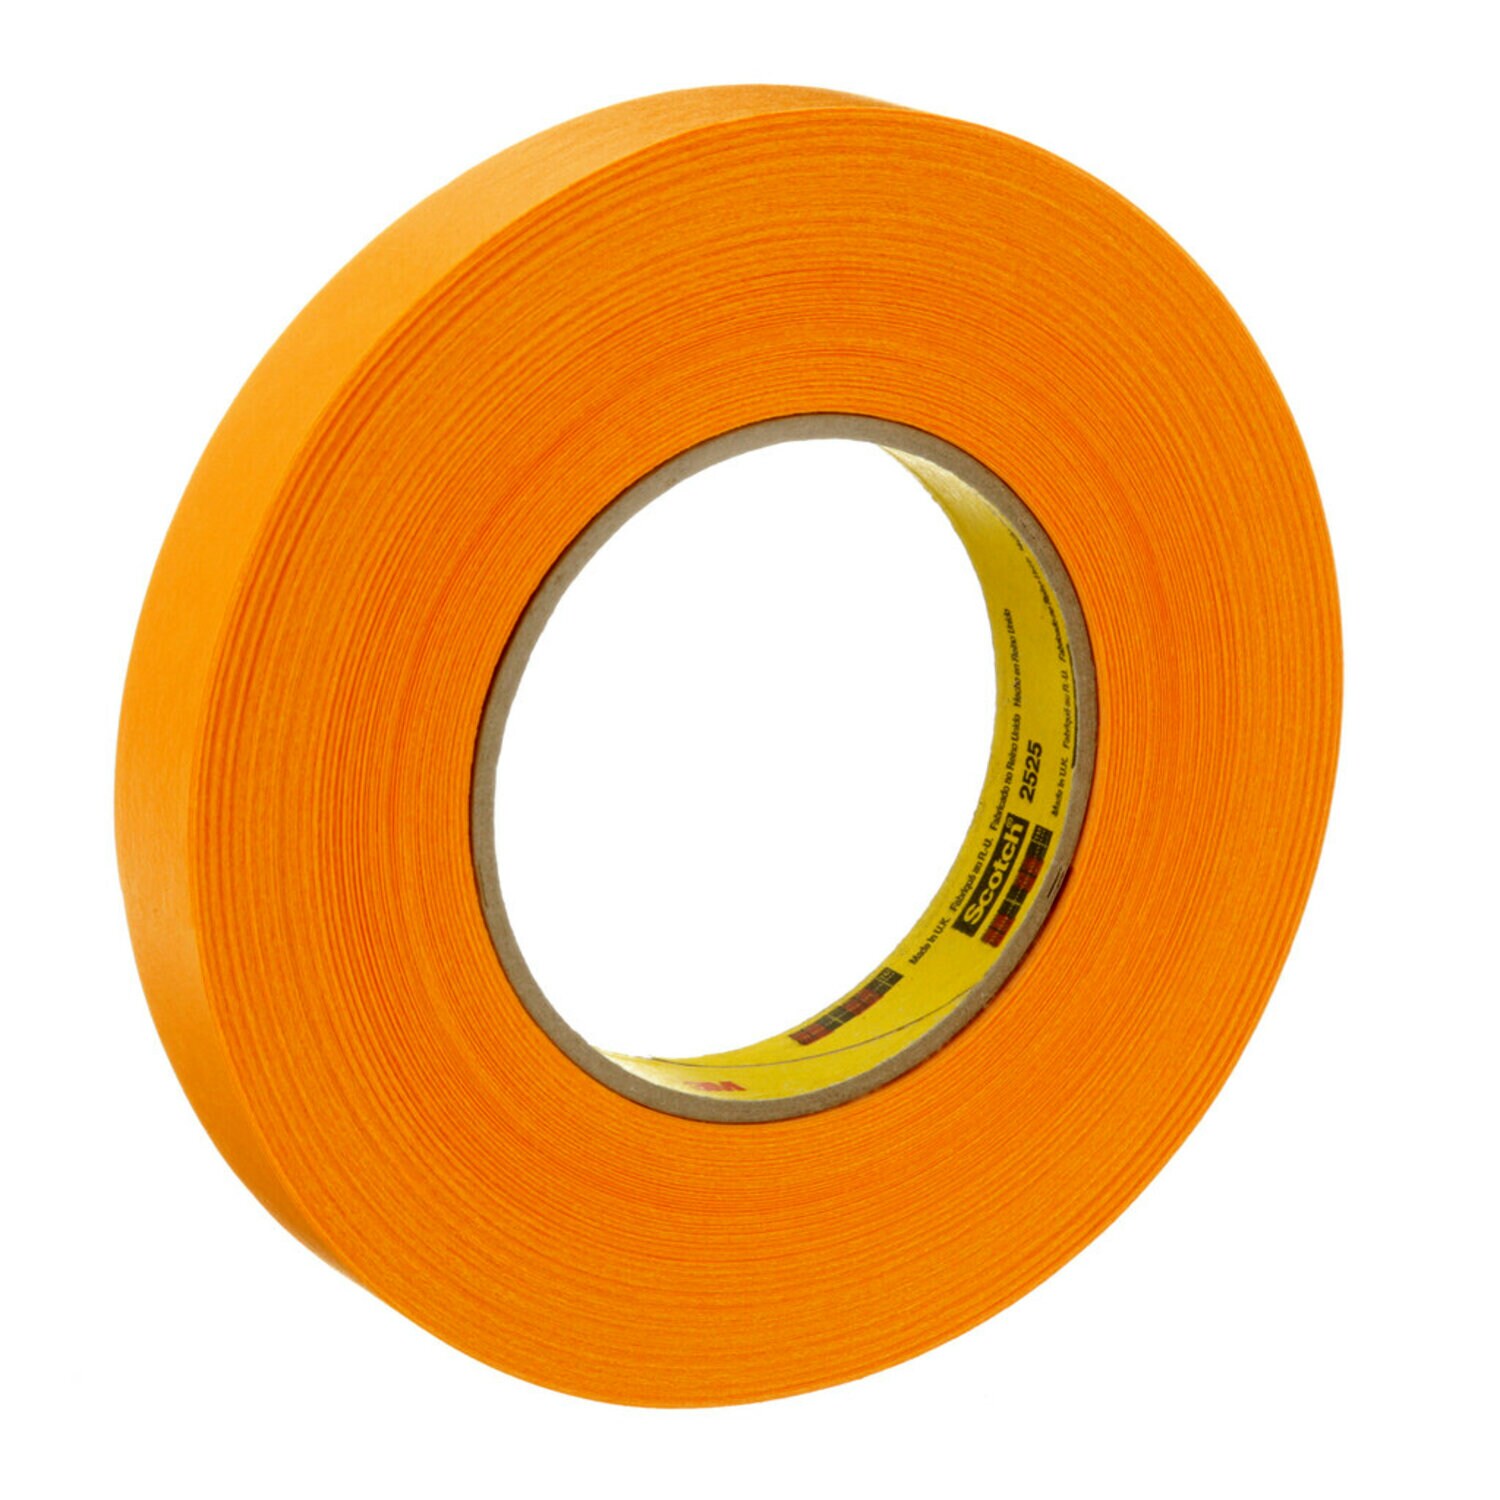 7000088506 - 3M Performance Flatback Tape 2525, Orange, 18 mm x 55 m, 9.5 mil, 48
Rolls/Case